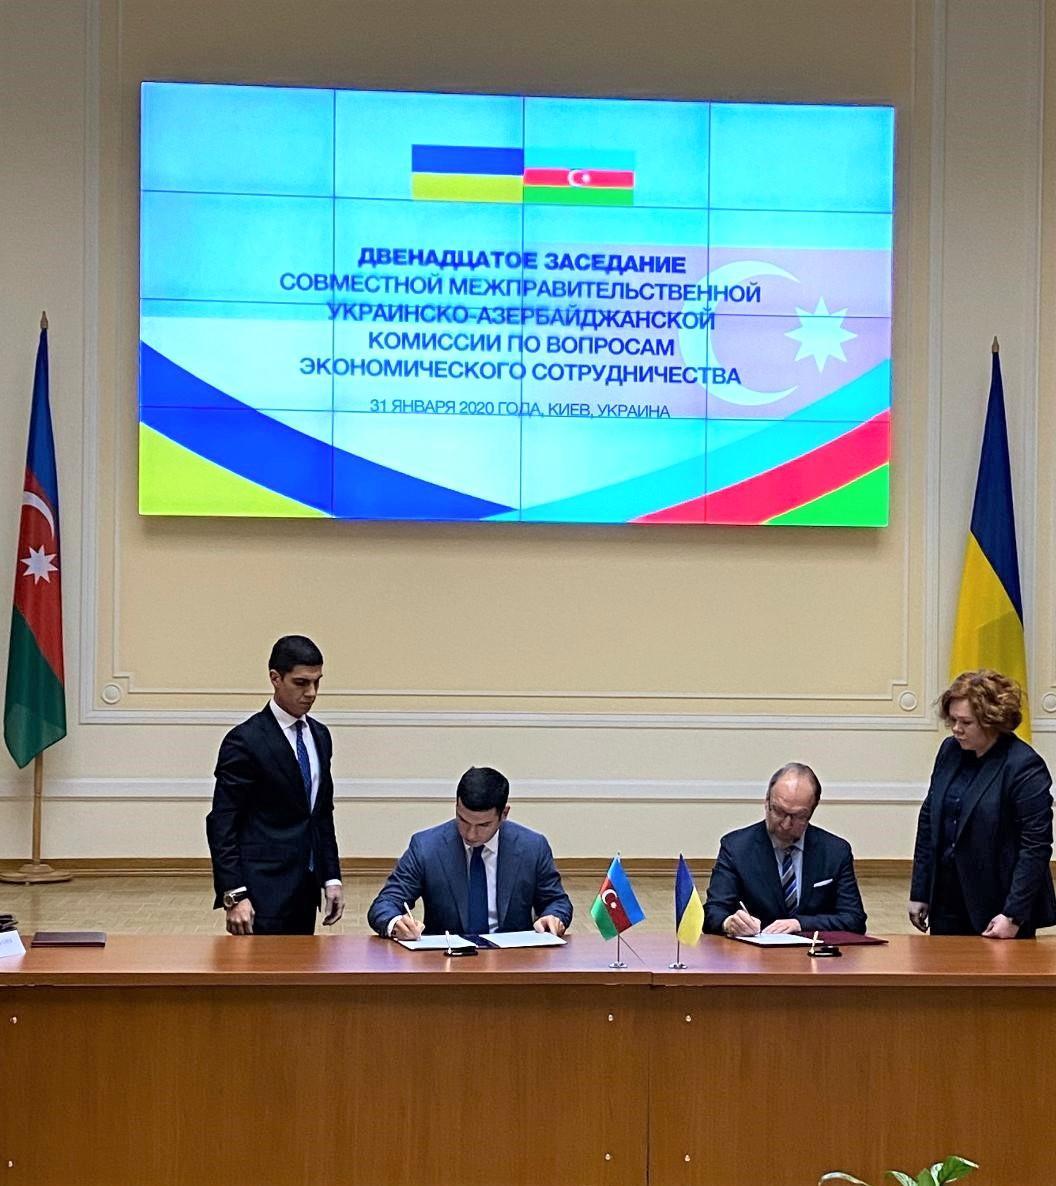 Azerbaijan, Ukraine sign agreement on SMEs cooperation [PHOTO]